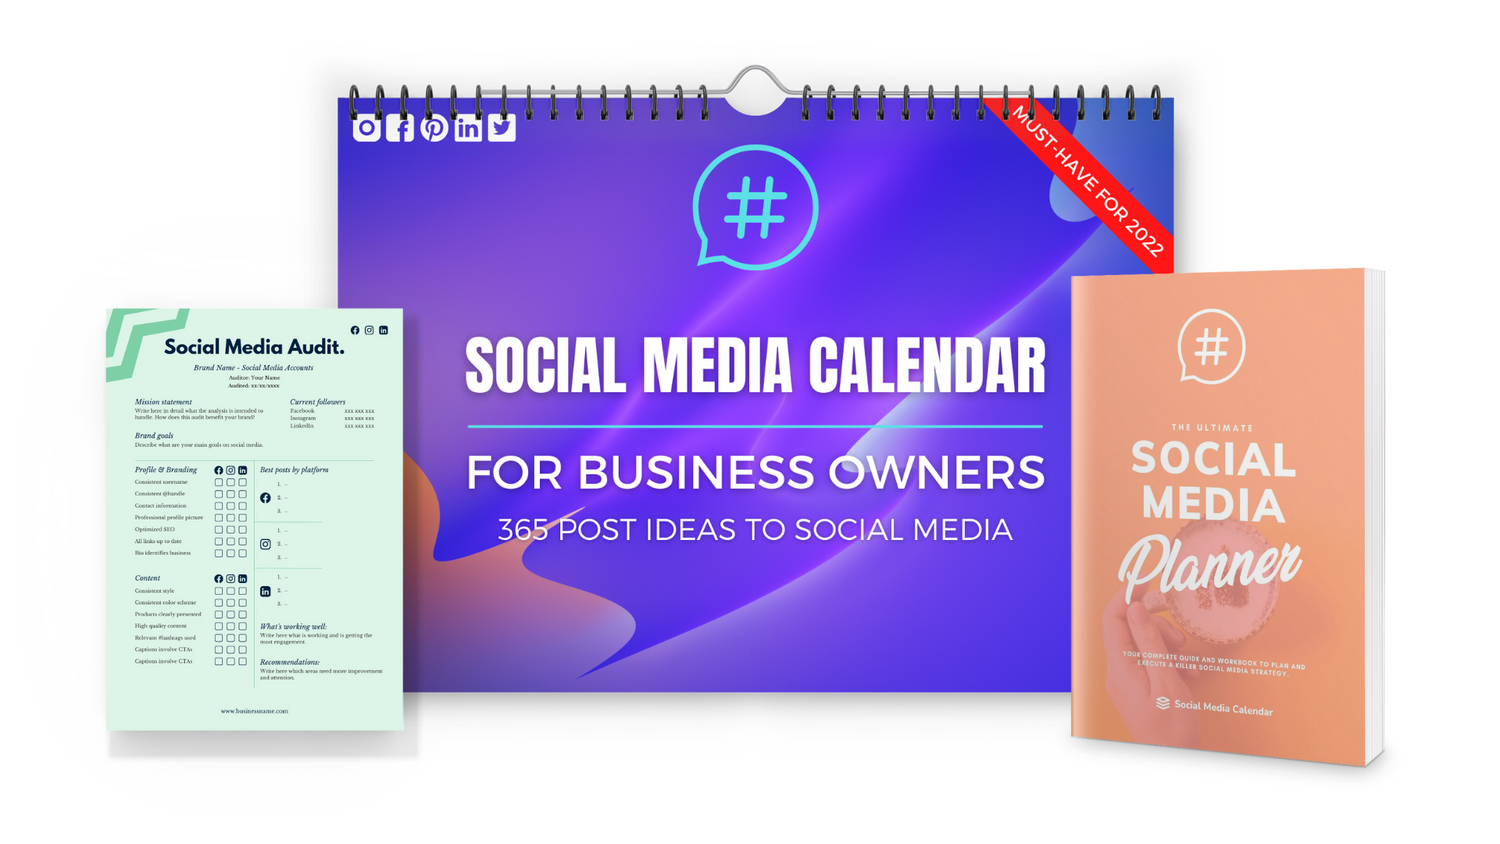 FREE Social Media Success Kit!